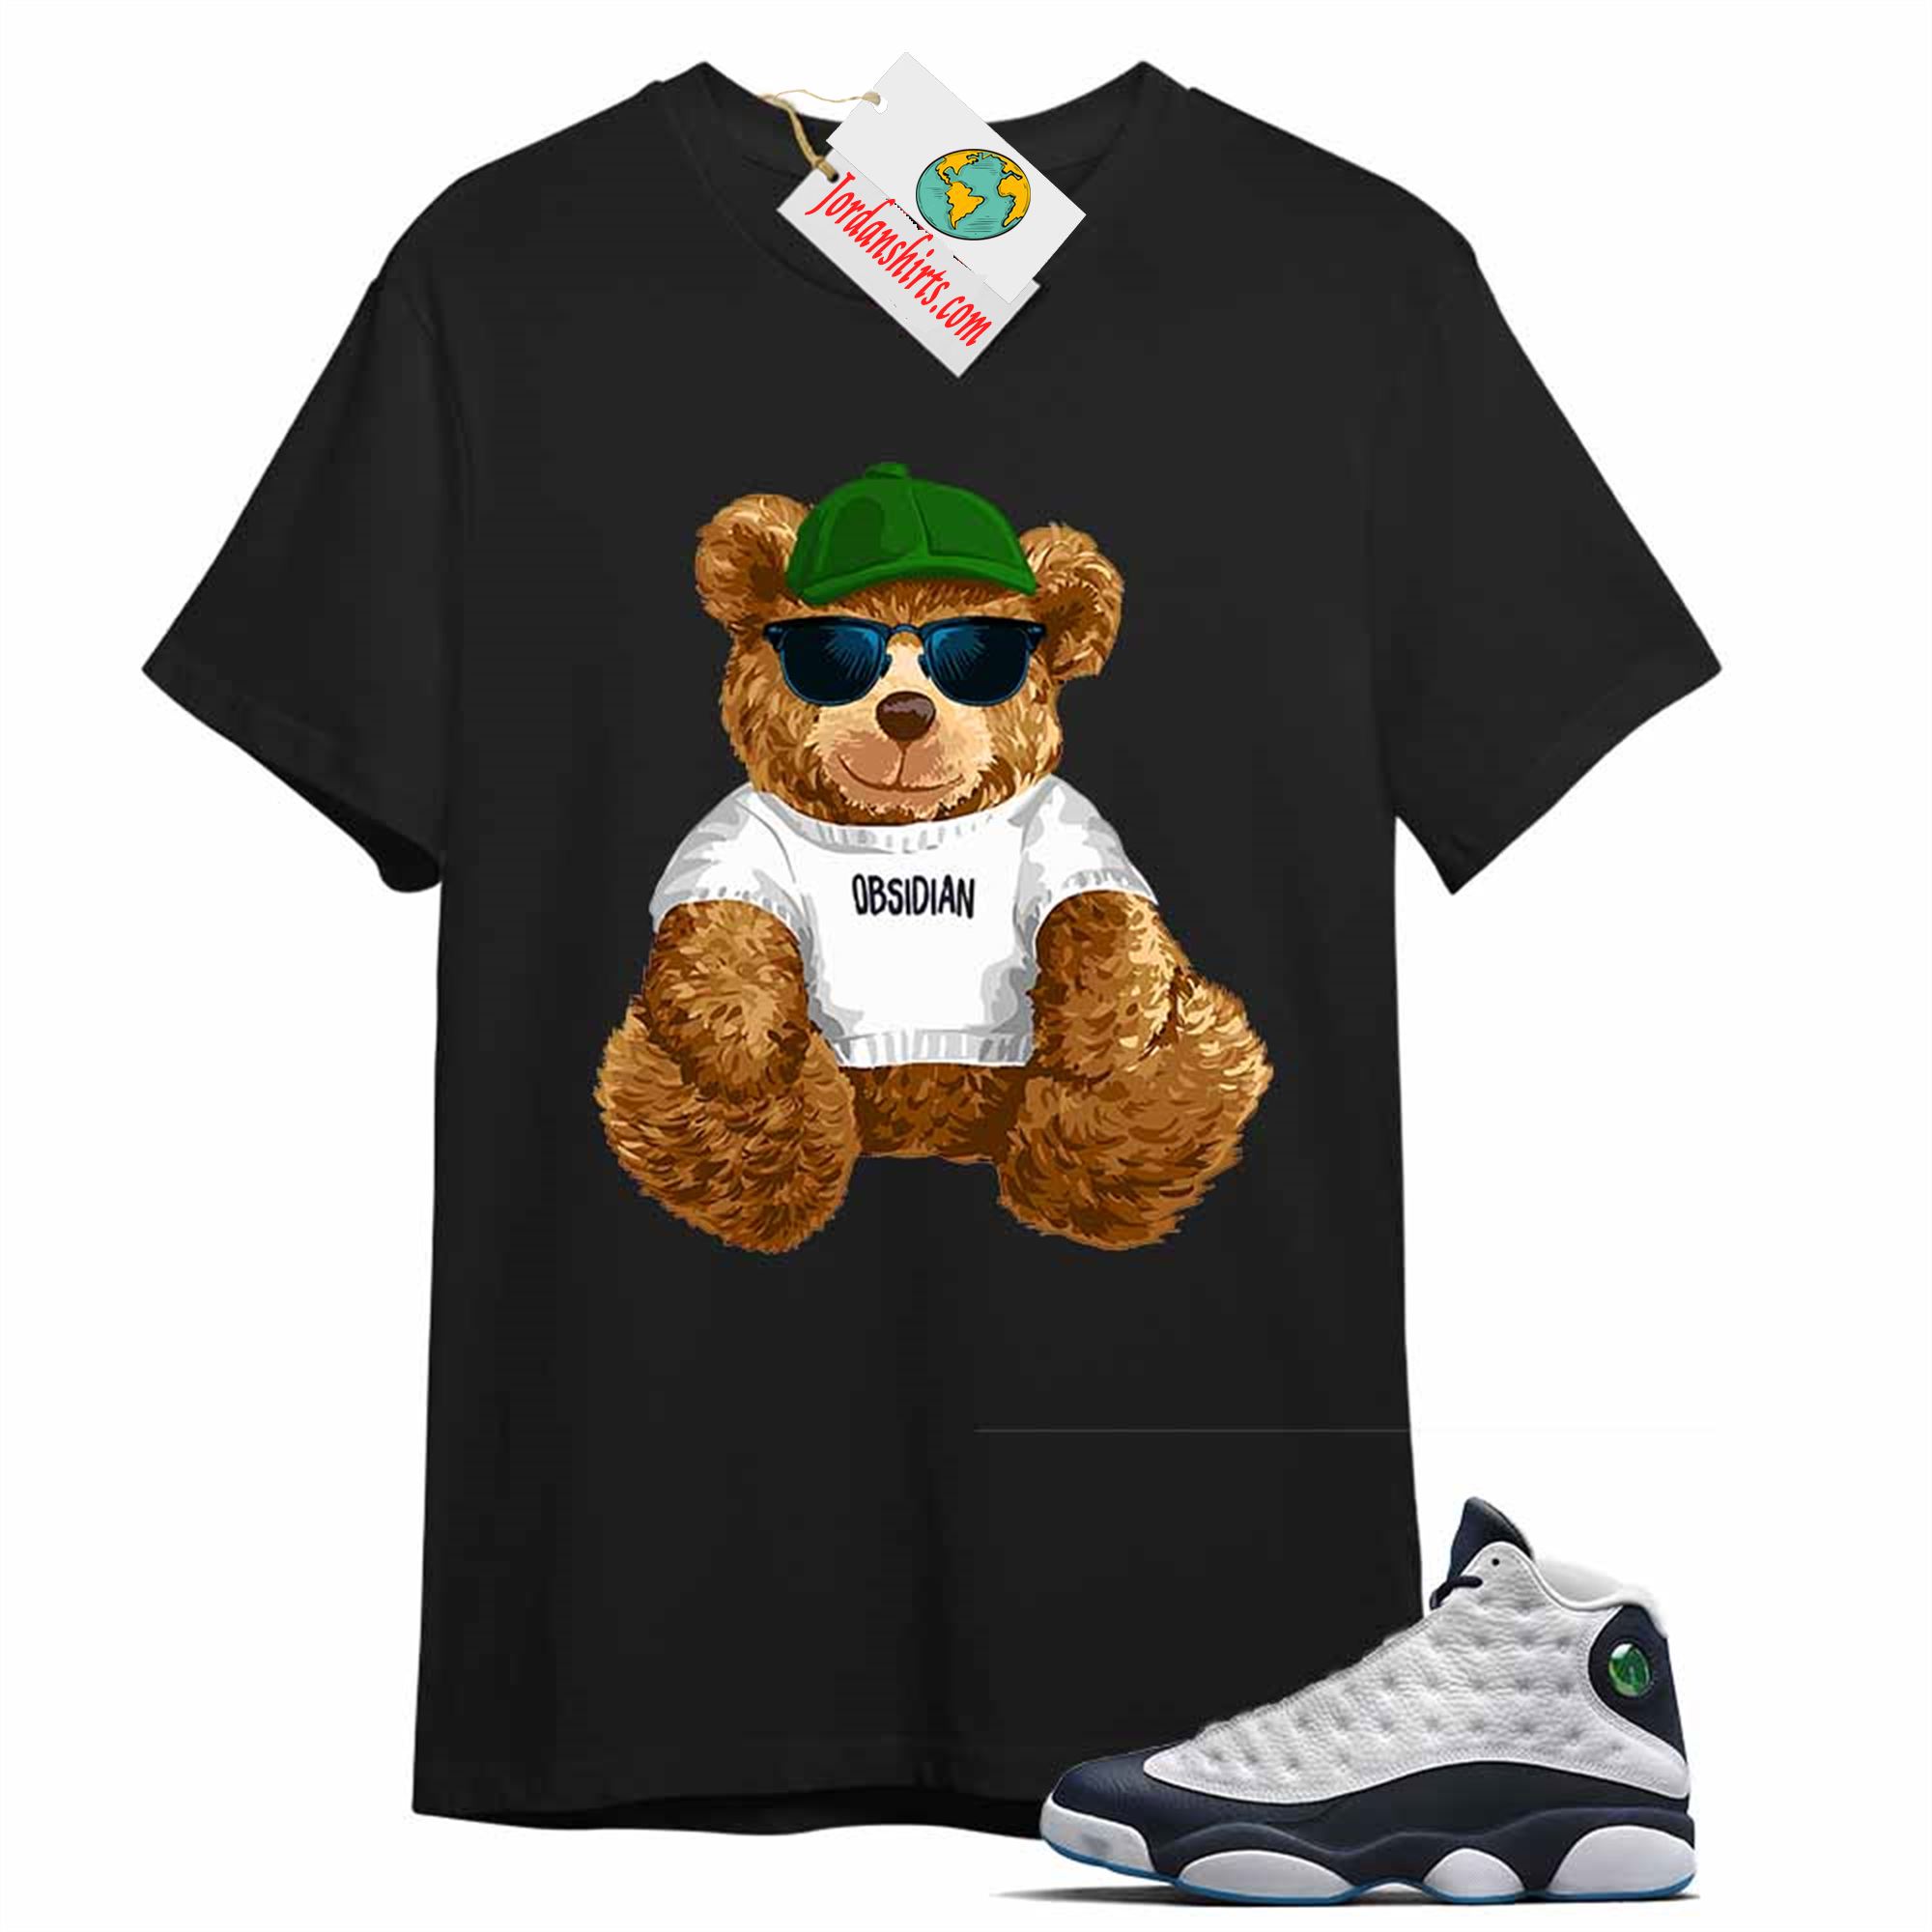 Jordan 13 Shirt, Teddy Bear With Sunglasses _ Hat Black T-shirt Air Jordan 13 Obsidian 13s Plus Size Up To 5xl